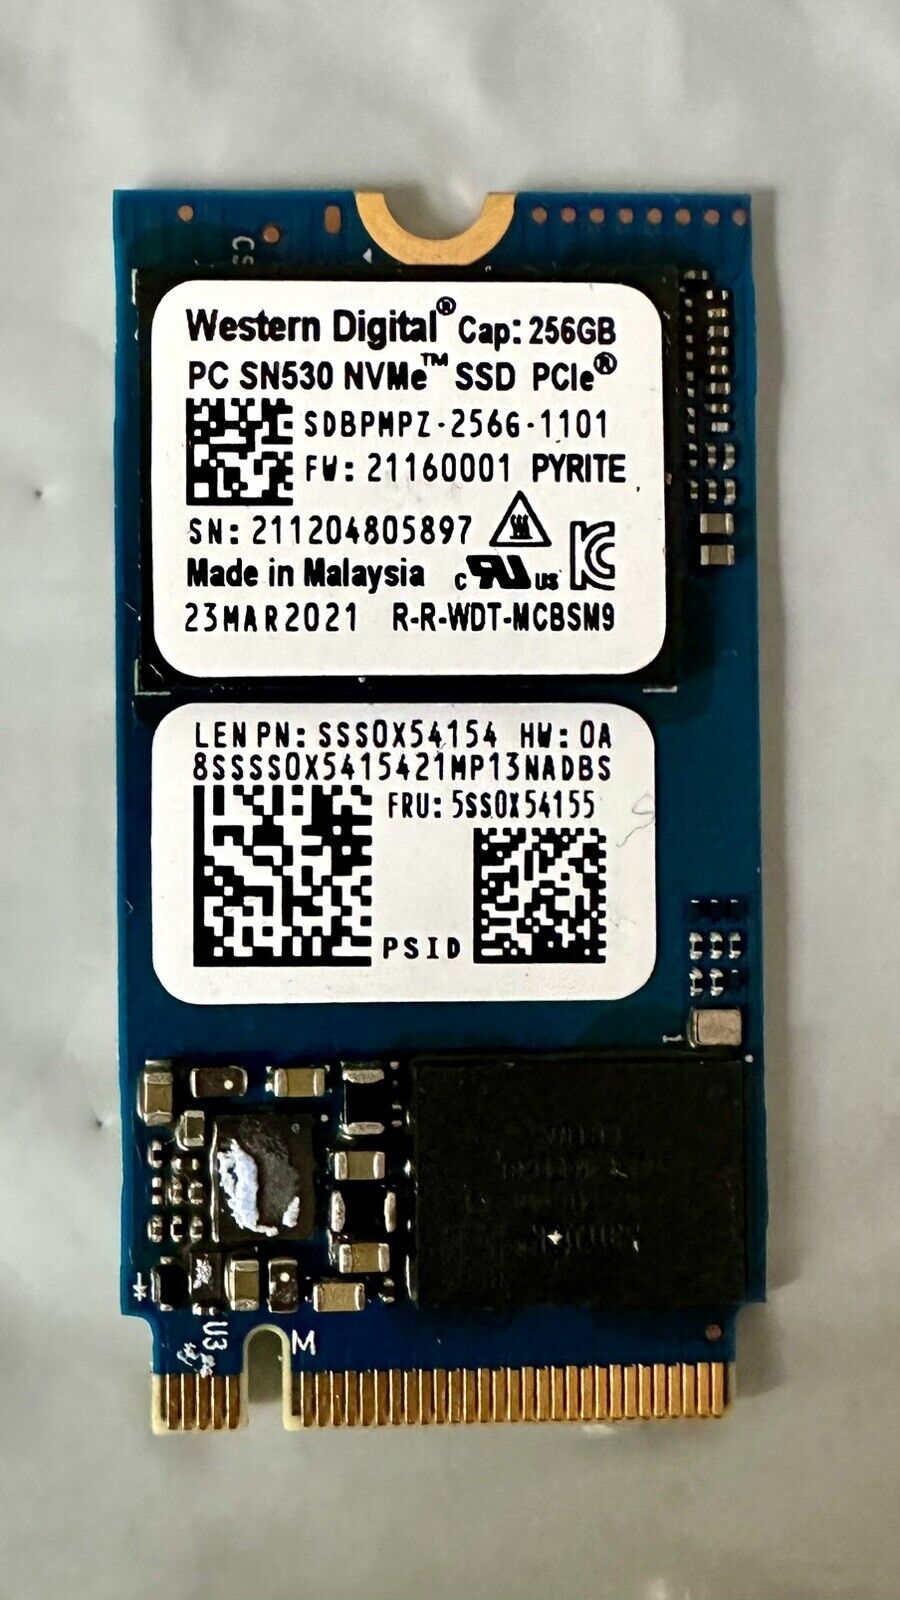 Western Digital SDBPMPZ-256G-1101 PC SN530 256GB NVMe SSD